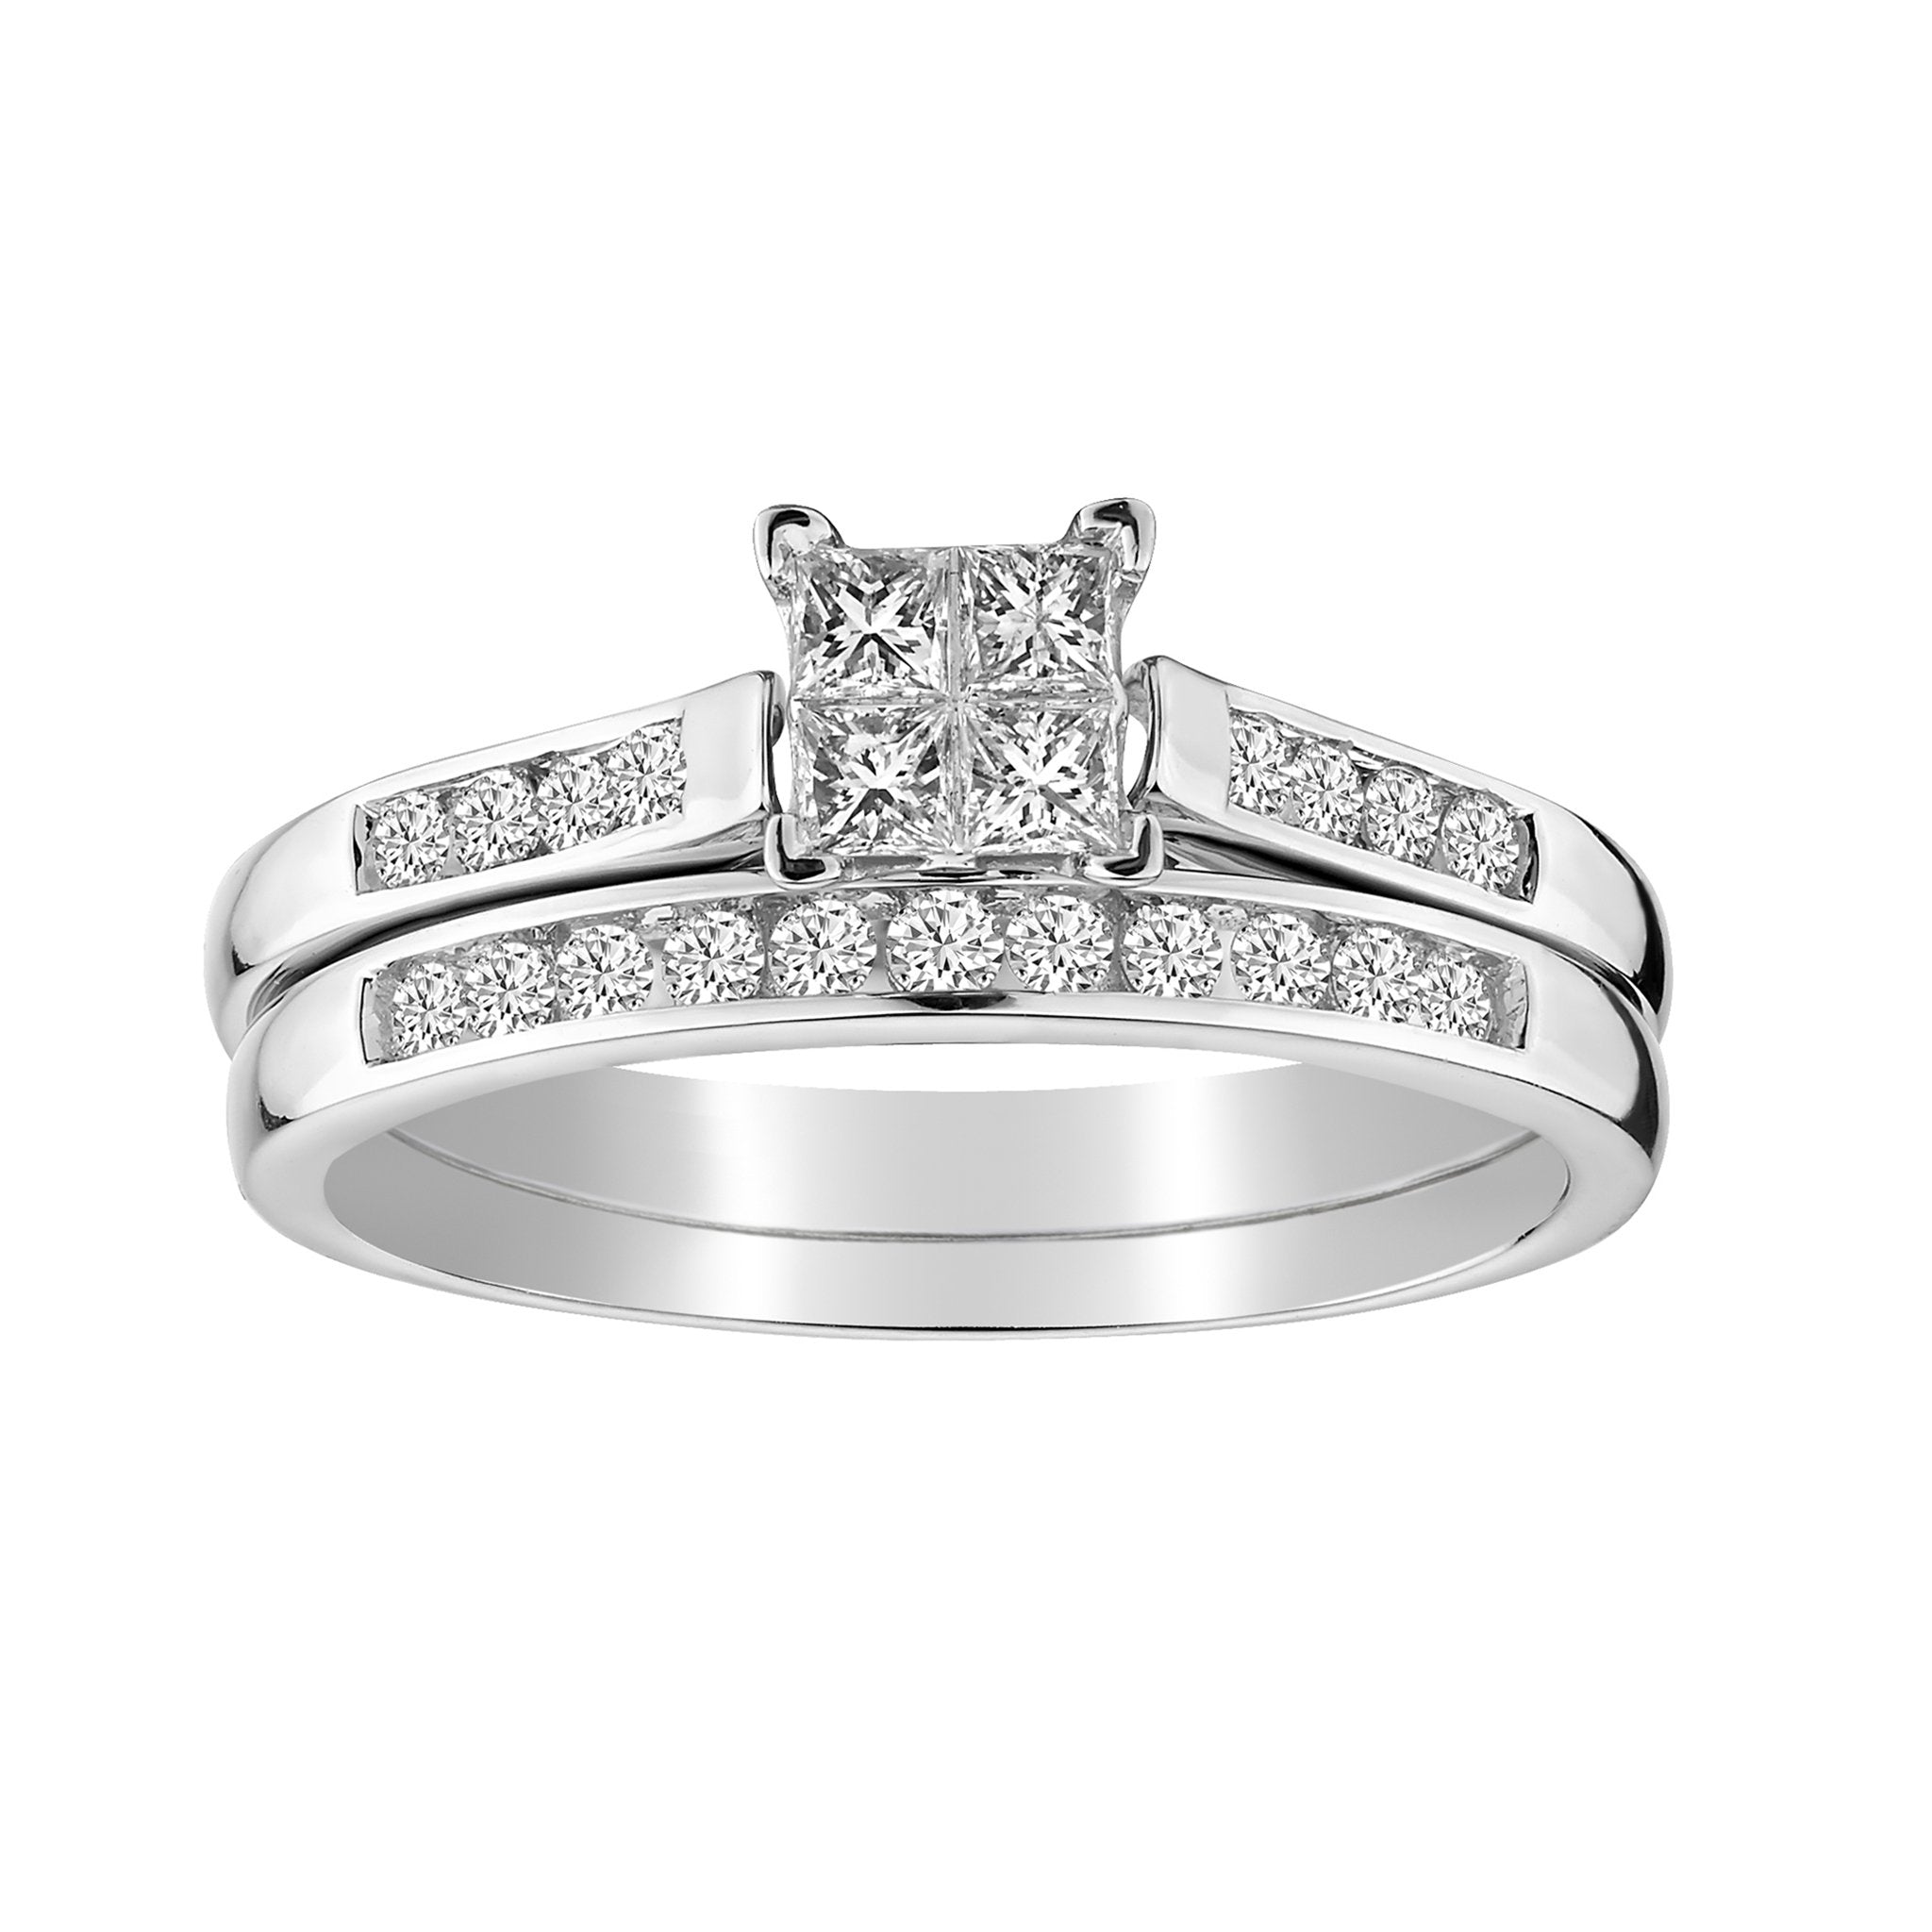 .50 Carat Diamond Ring Set,  10kt White Gold. Griffin Jewellery Designs